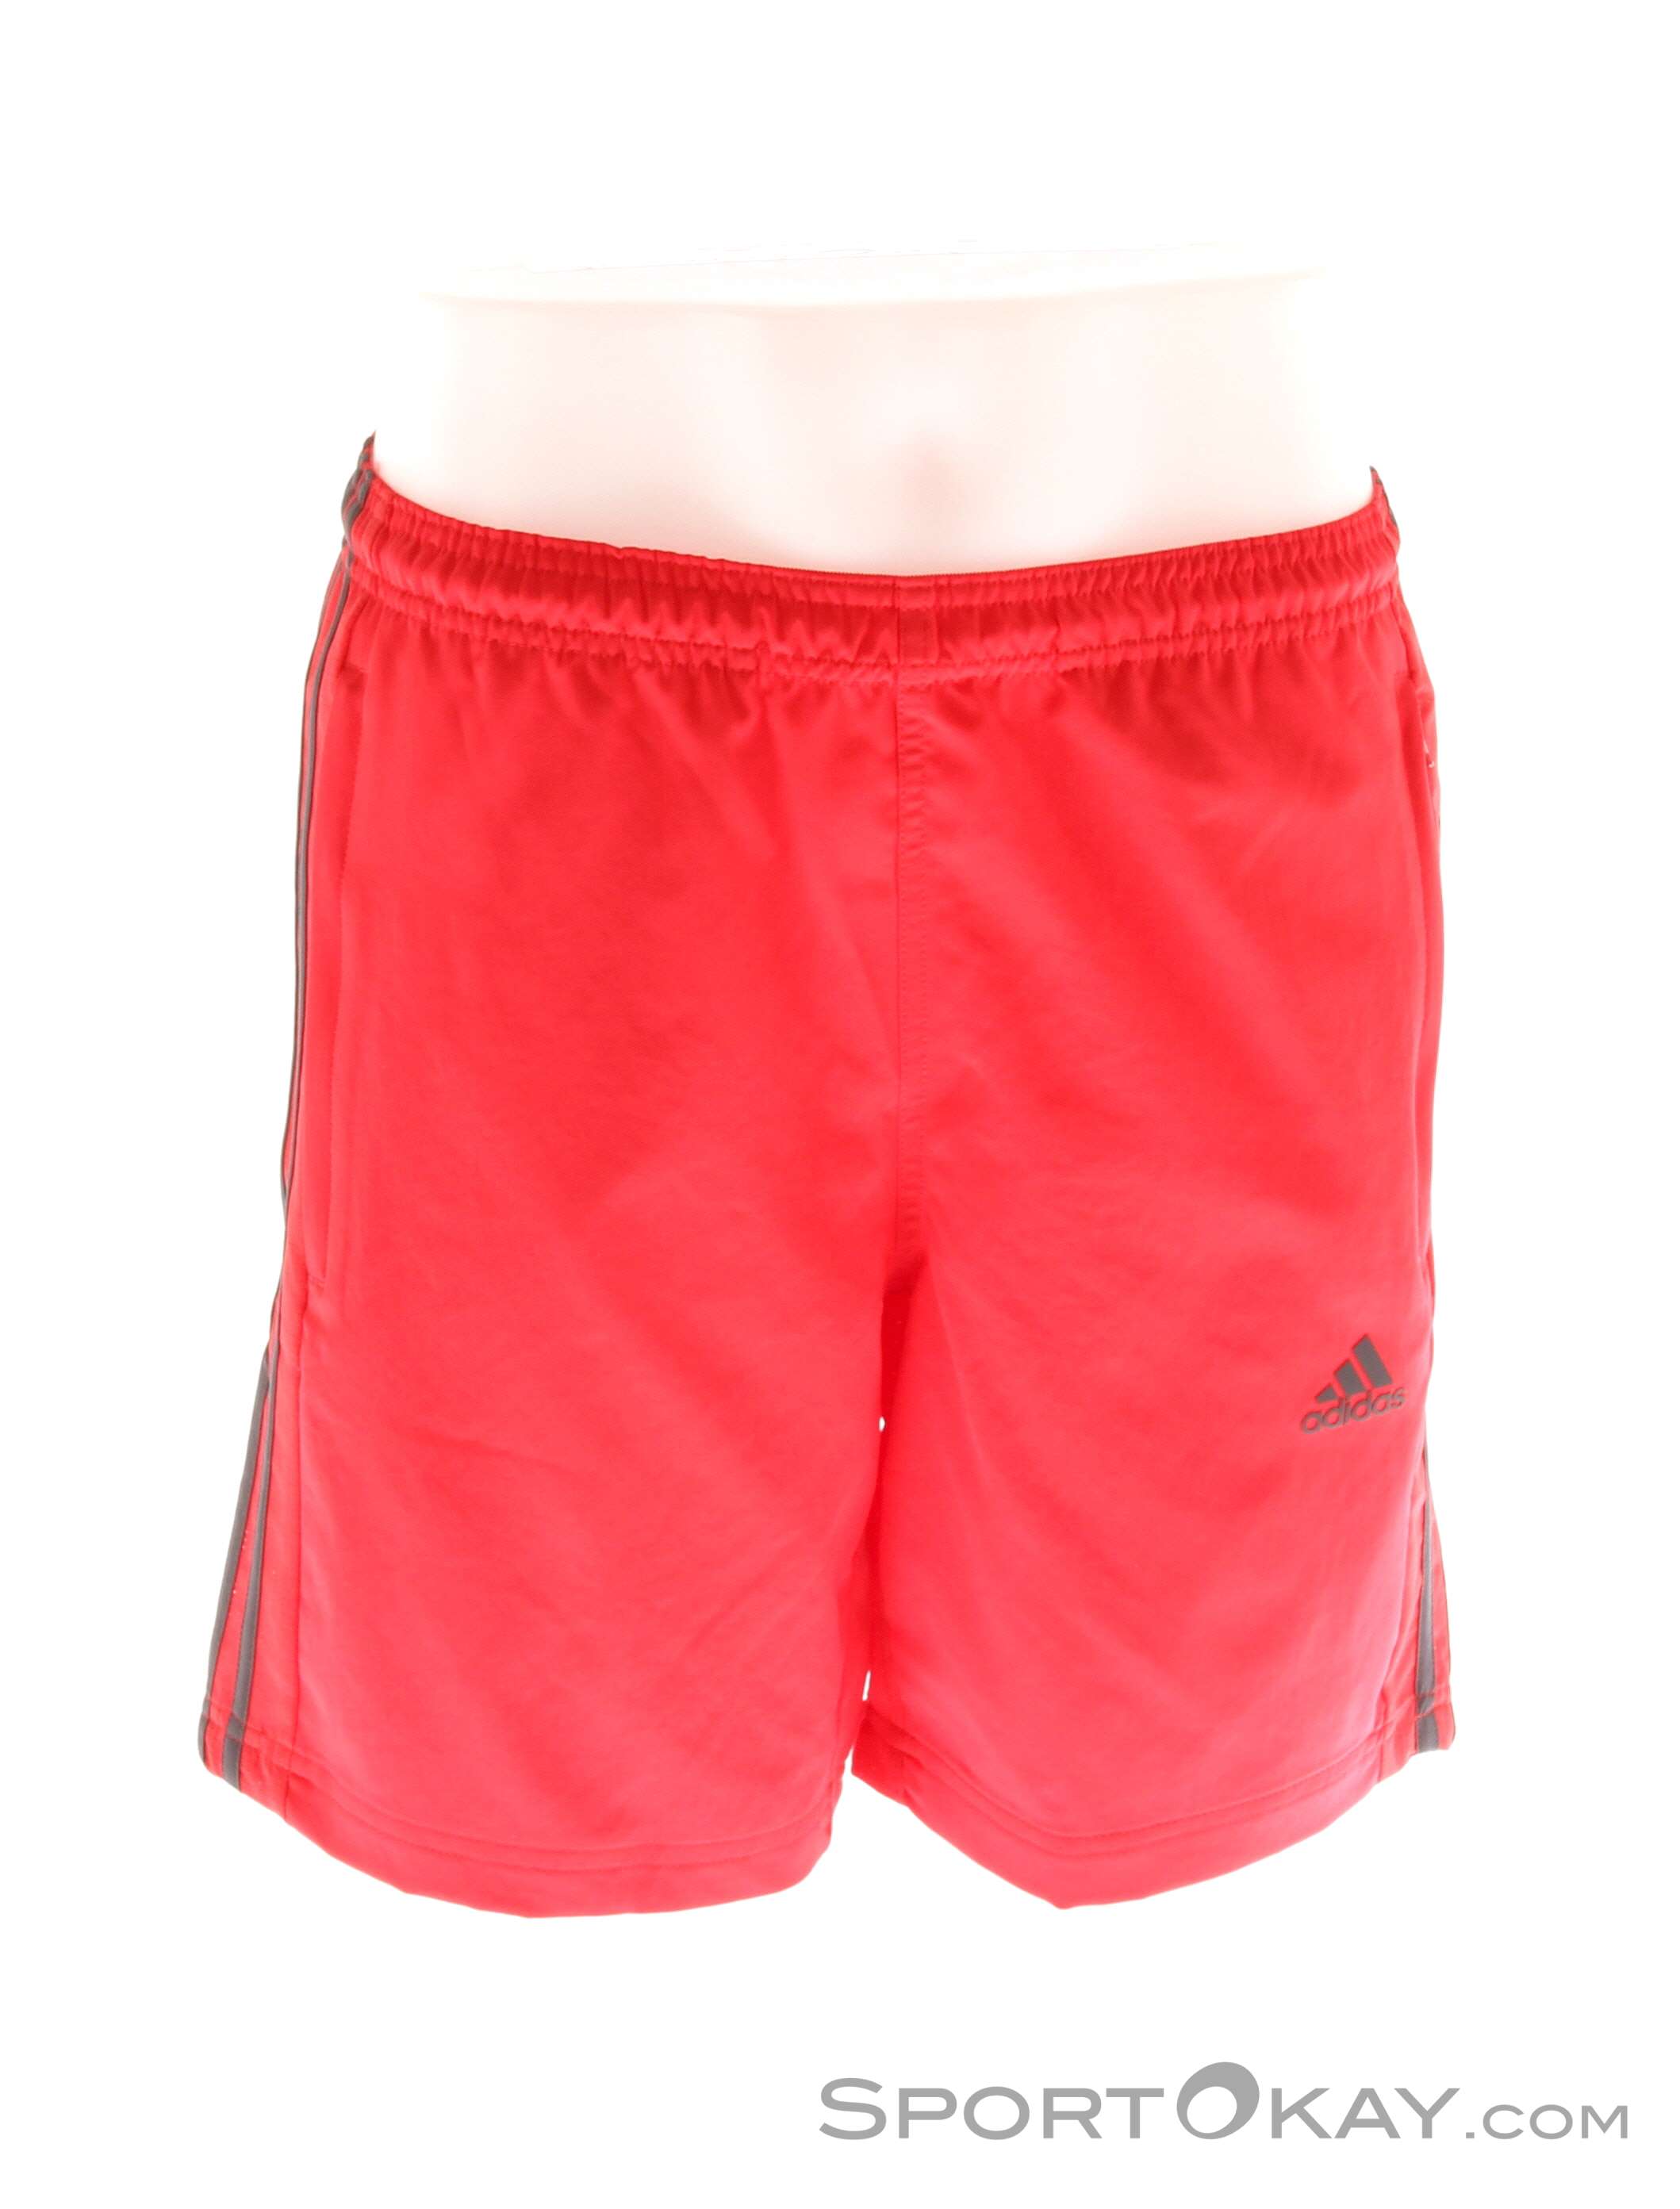 Adidas Cool Shorts Mens Training - Pants - Fitness Clothing - Fitness -